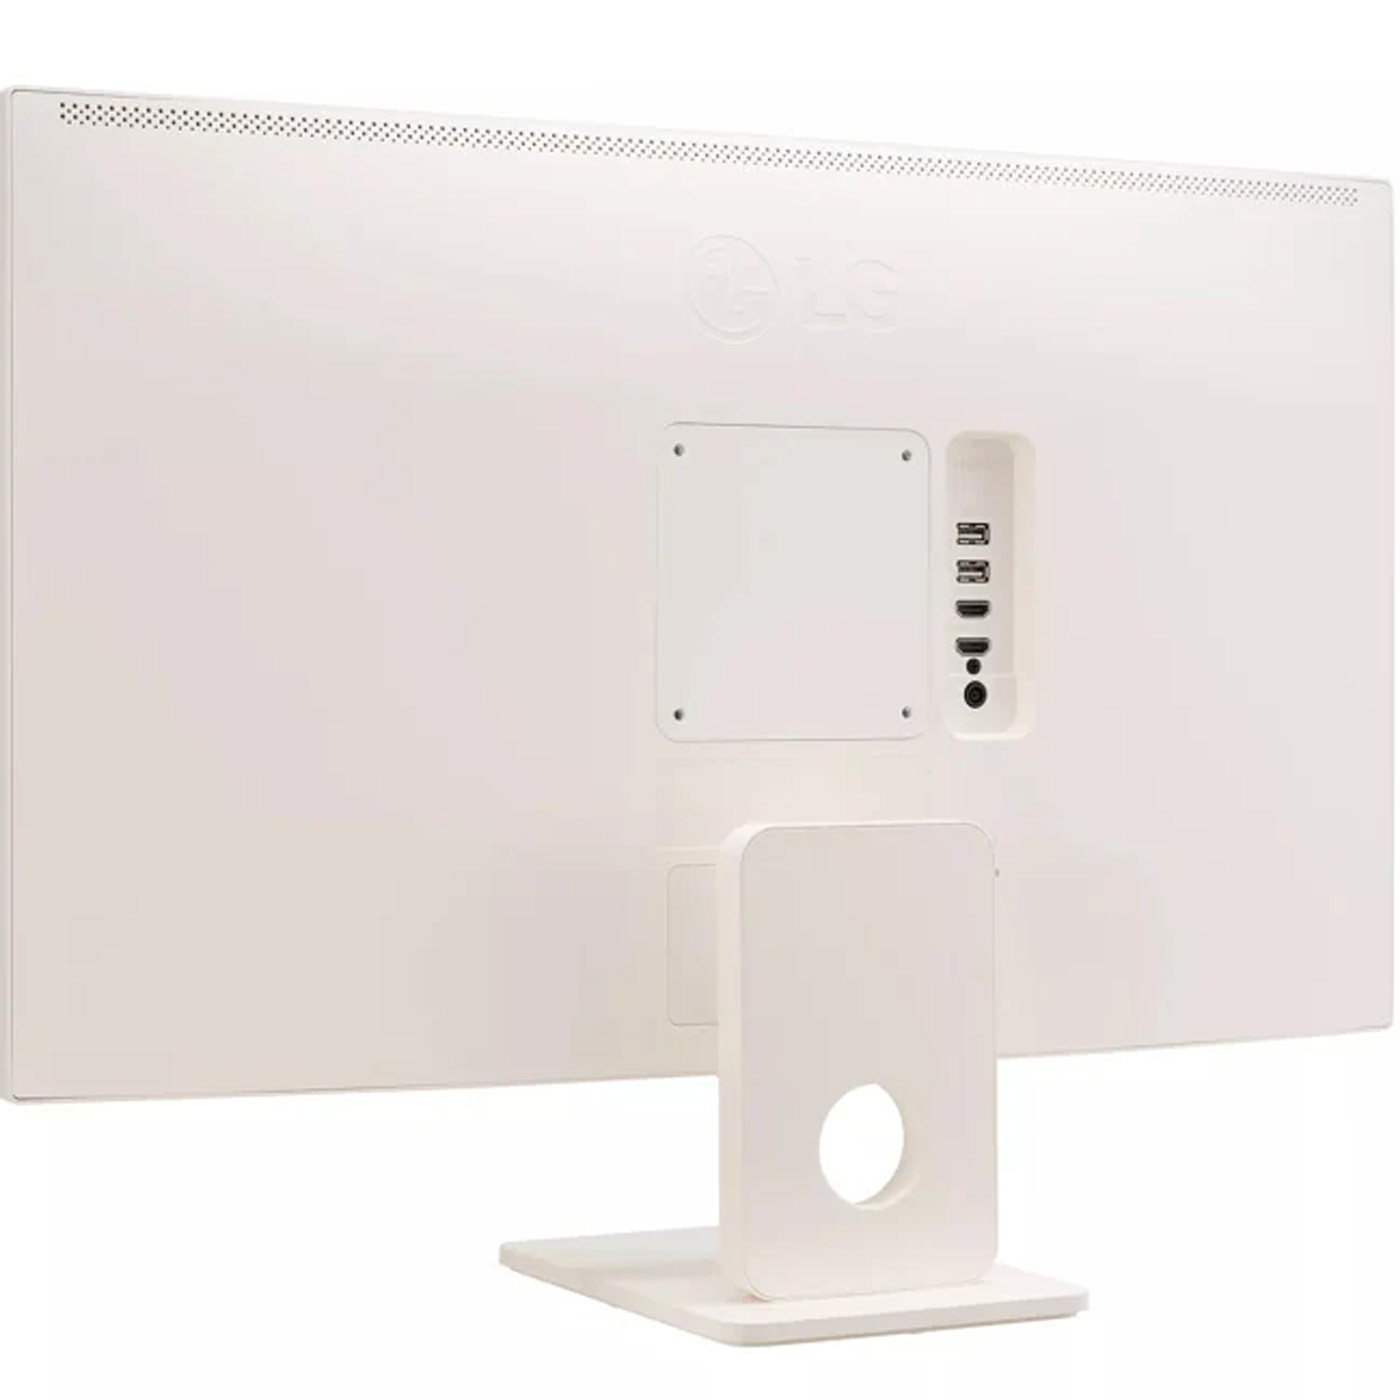 LG 27SR50F 27" FHD 1920x1080 60Hz LCD IPS Smart Monitor White - image 5 of 6